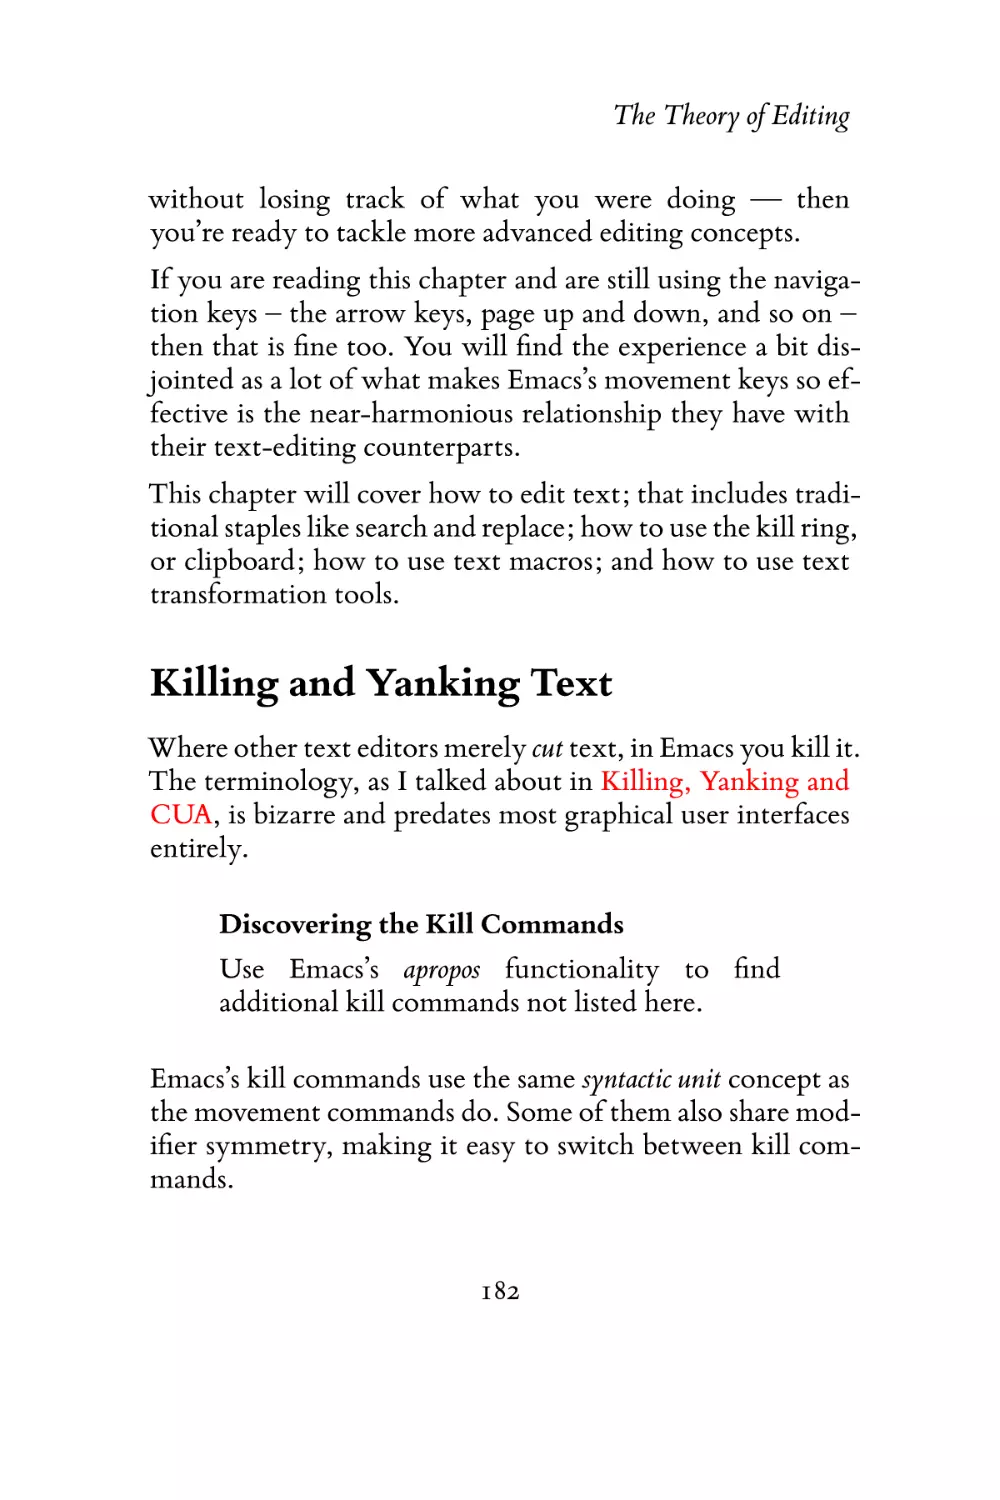 Killing and Yanking Text